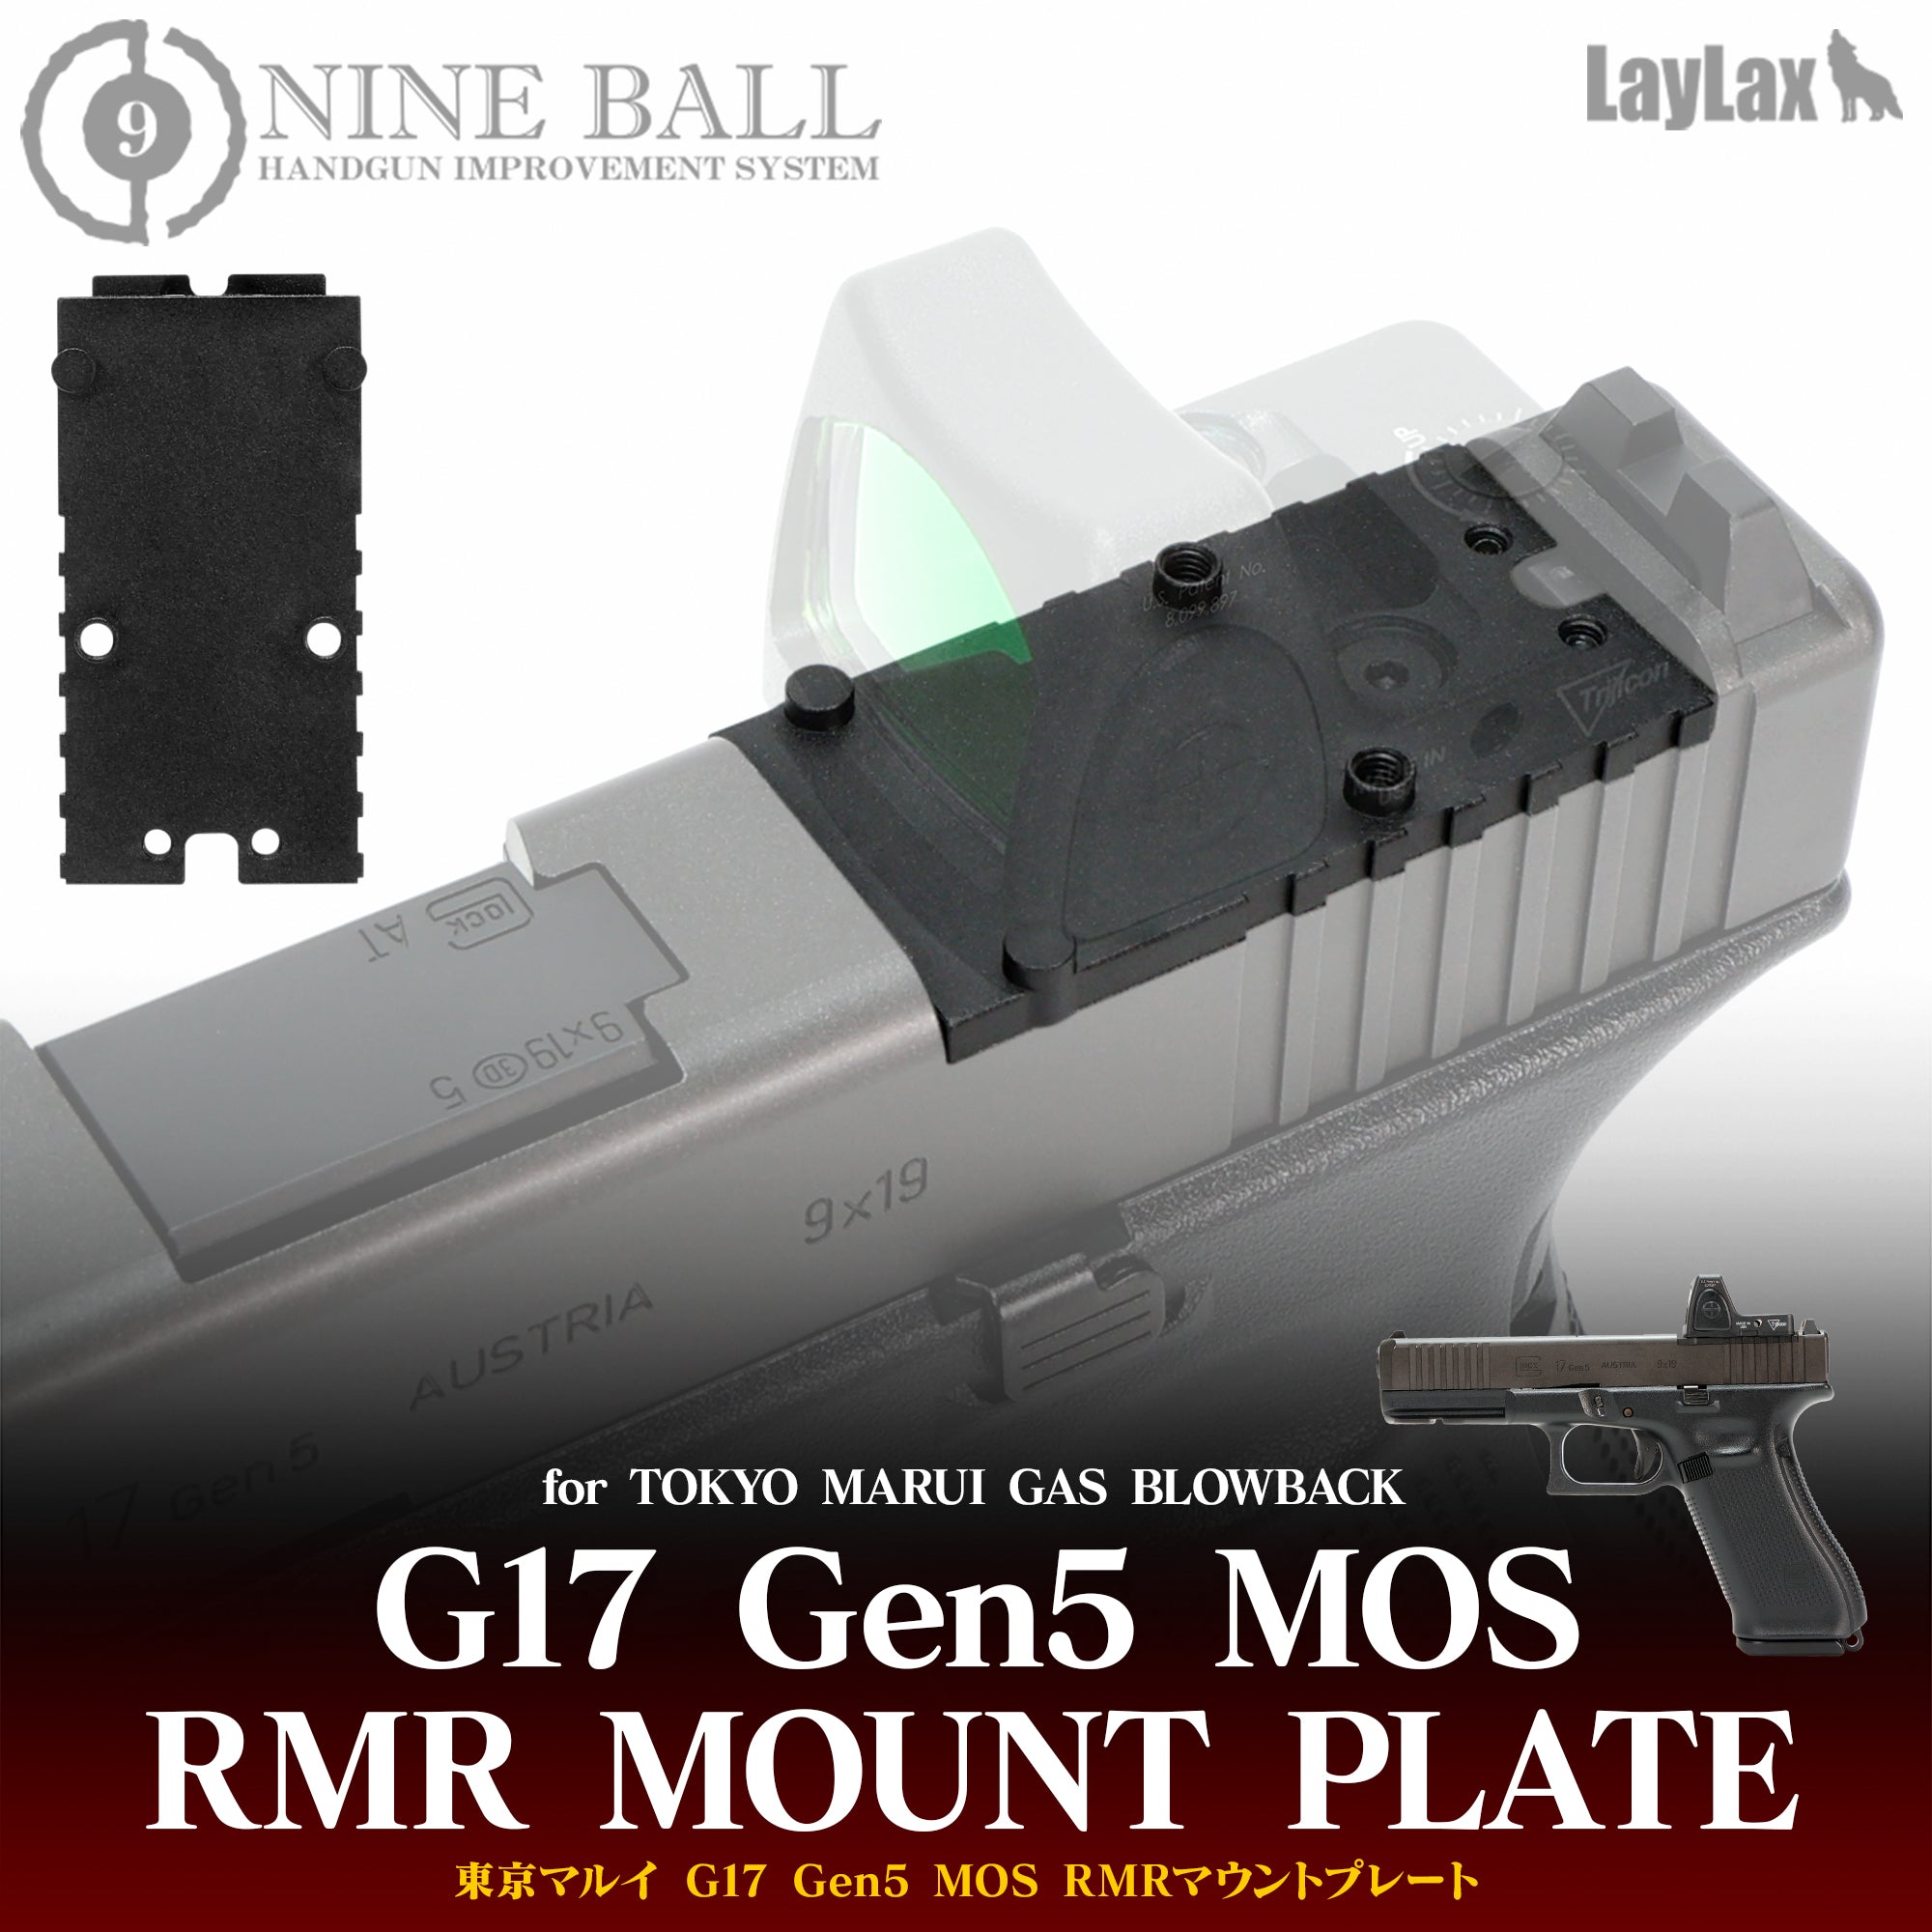 Tokyo Marui G17 Gen5 MOS RMR Mount Plate [NINEBALL]